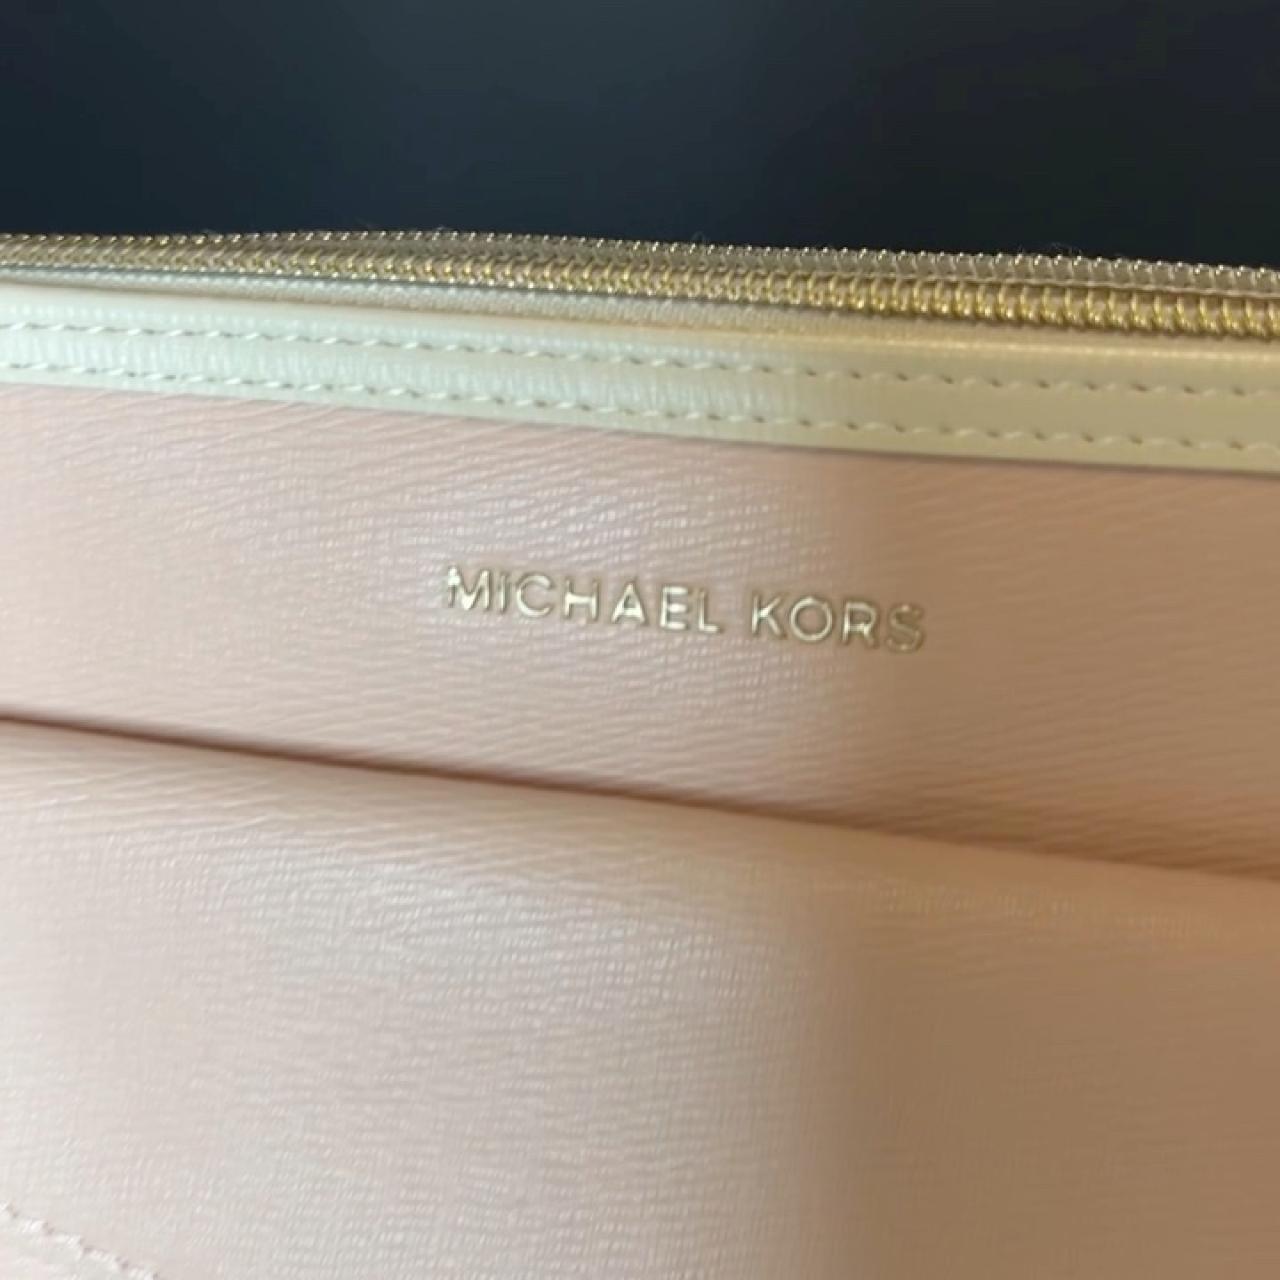 Michael Kors Trousse Pouch Clutch Bag with Wrist Strap Blush Pink